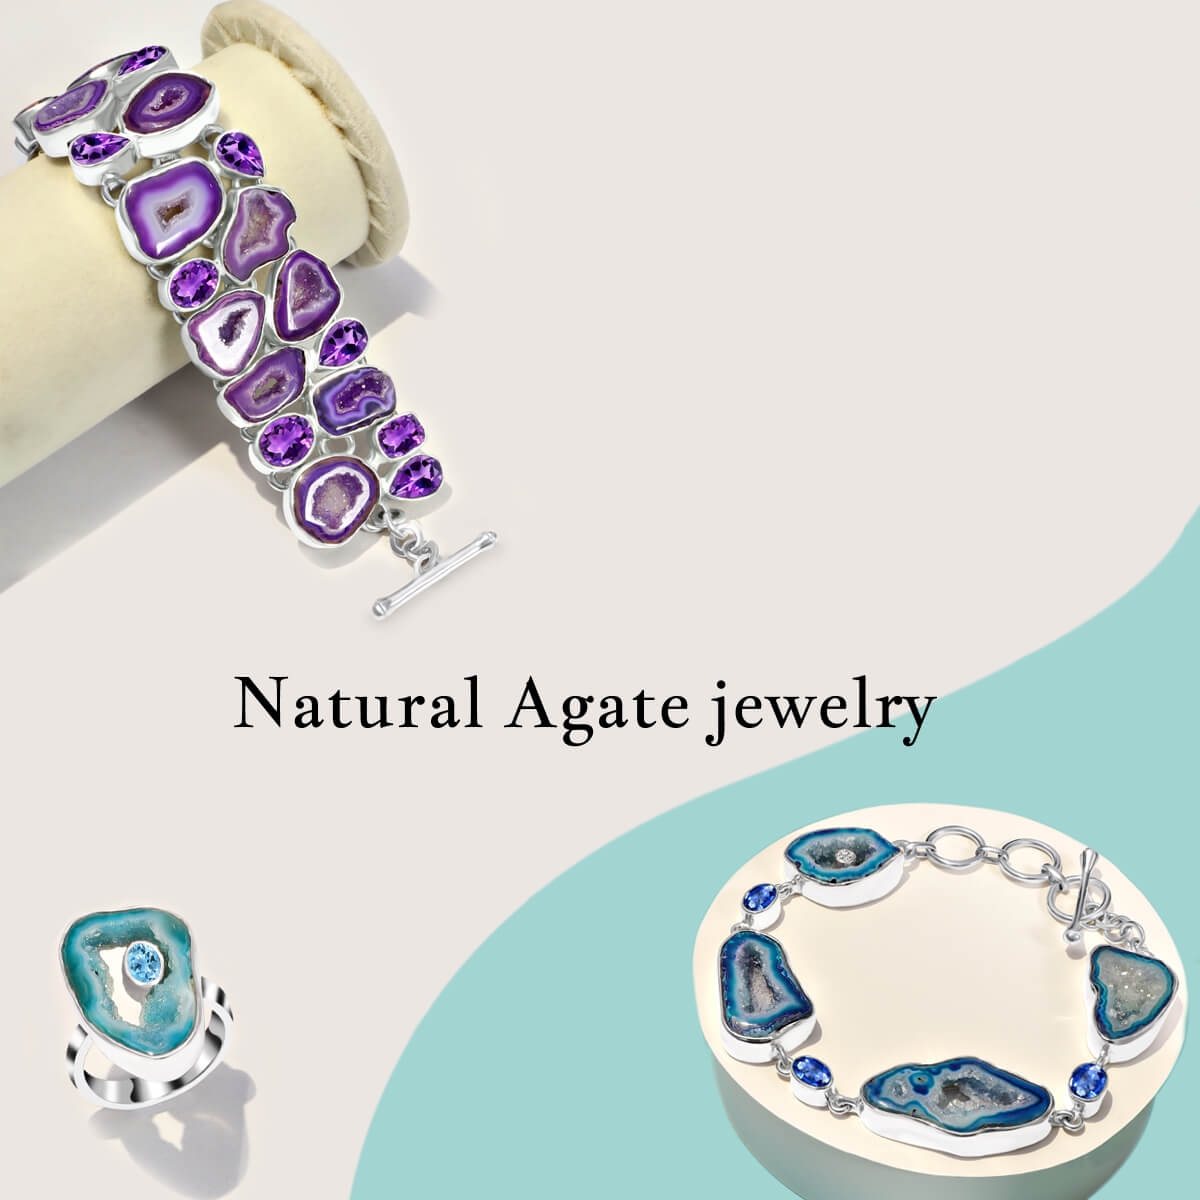 Agate Jewelry